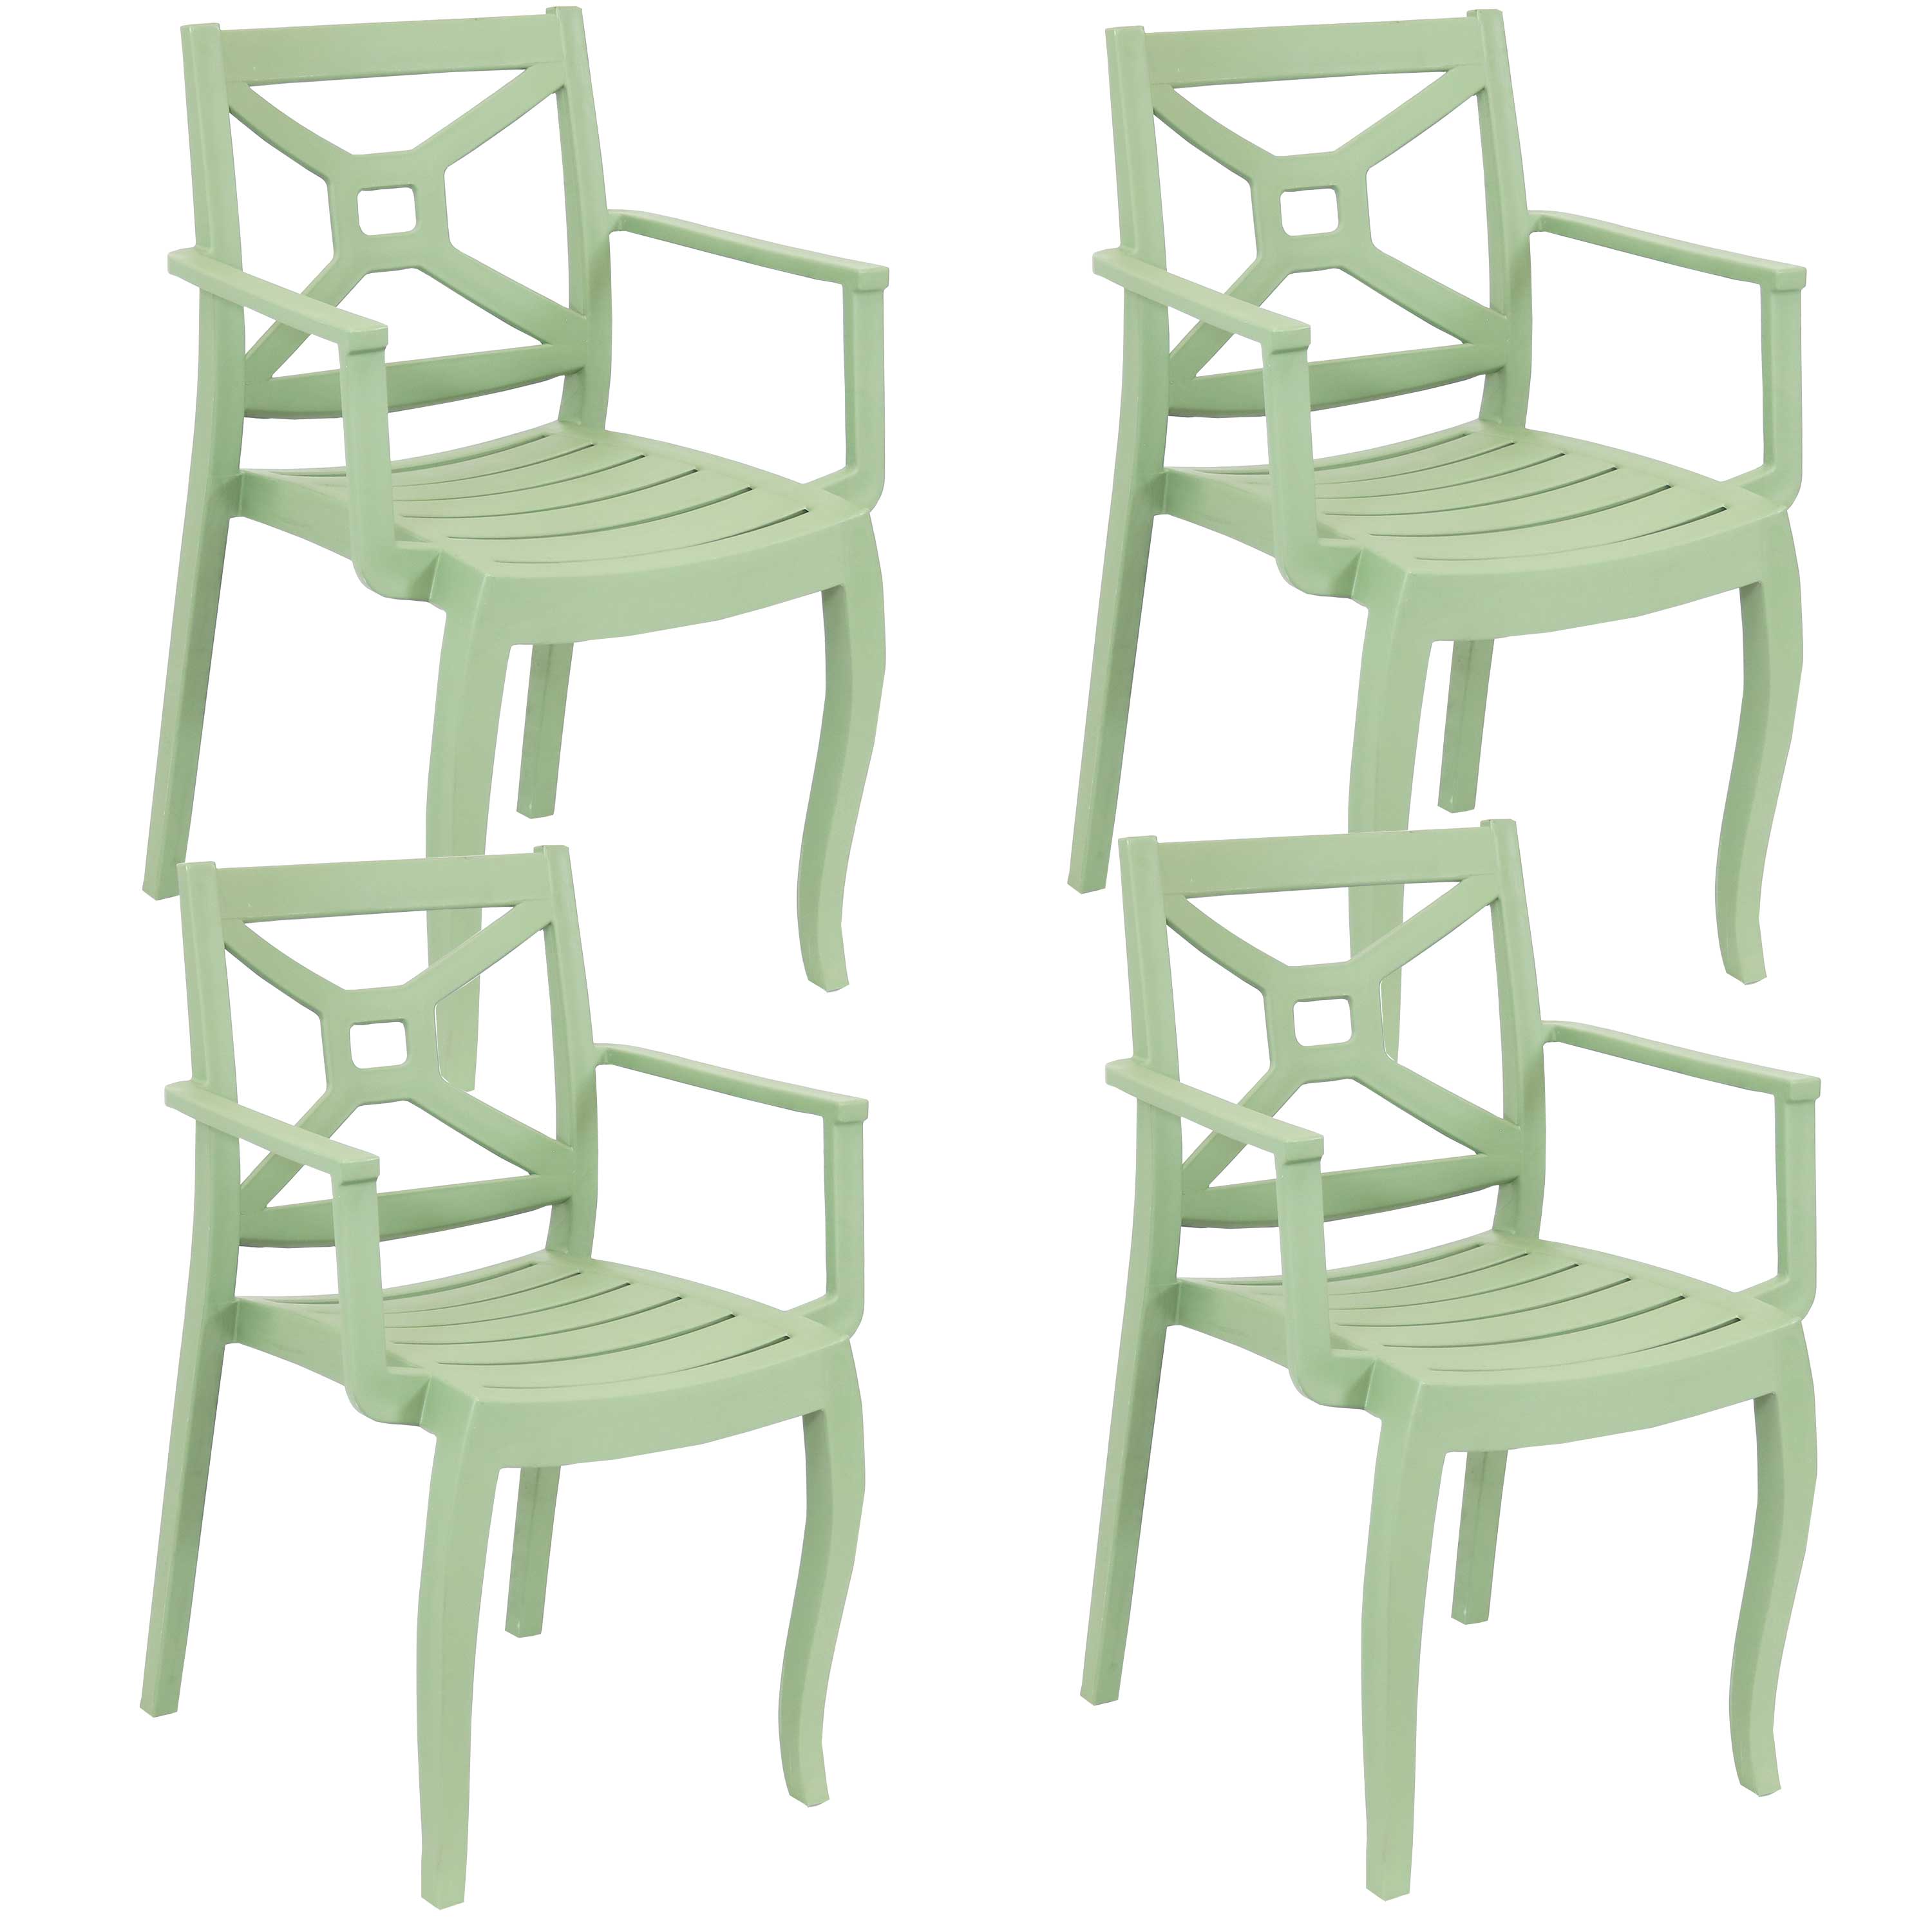 Sunnydaze Tristana Plastic Outdoor Patio Arm Chair - Set of 4 - Green